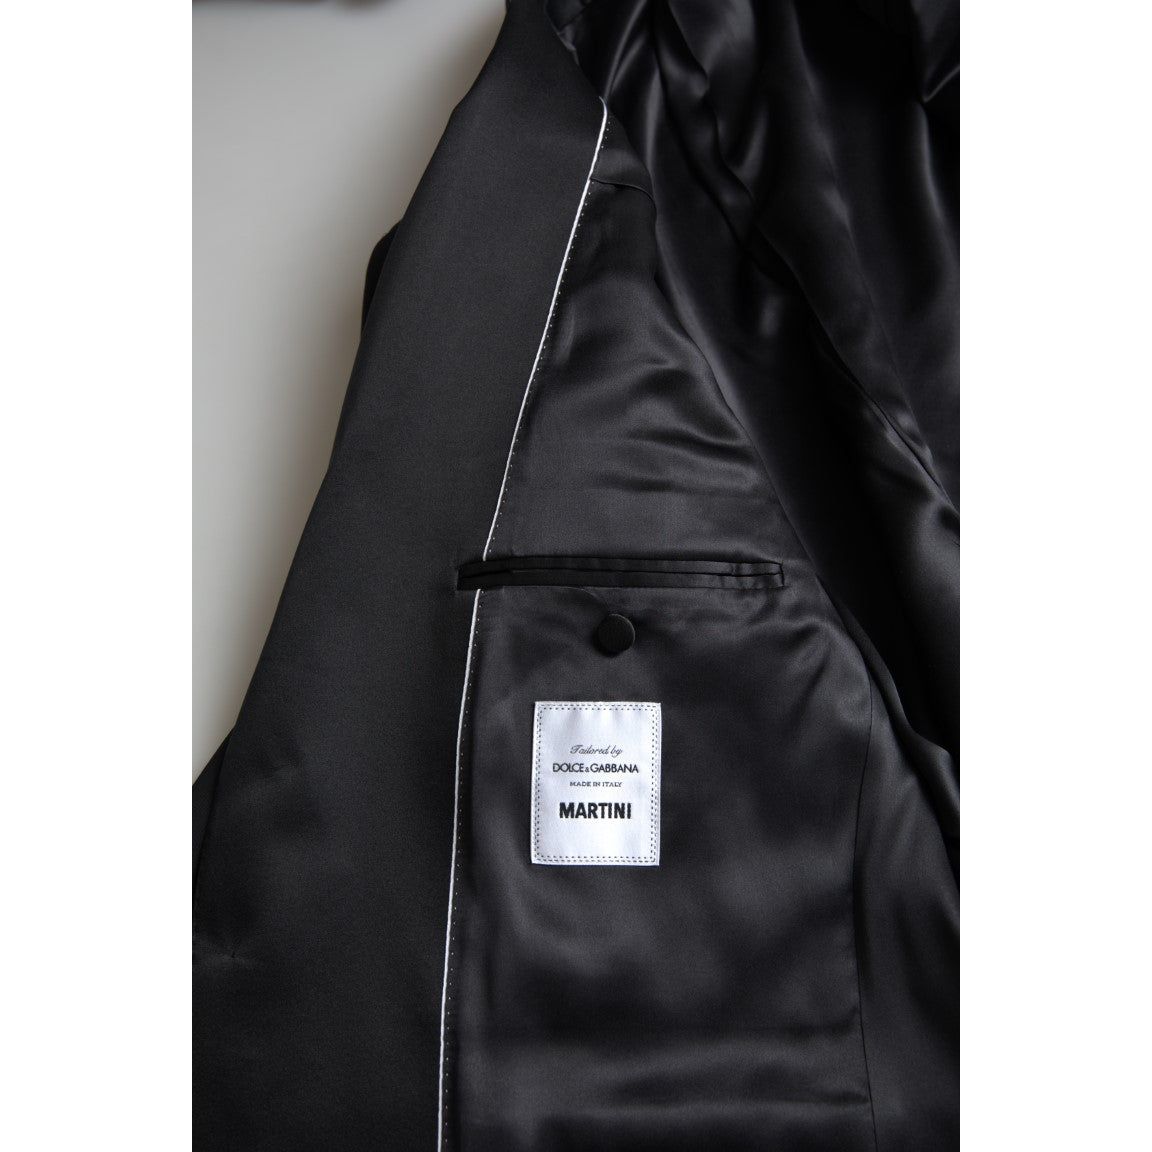 Dolce & GabbanaElegant Black Slim Fit Two-Piece SuitMcRichard Designer Brands£1369.00